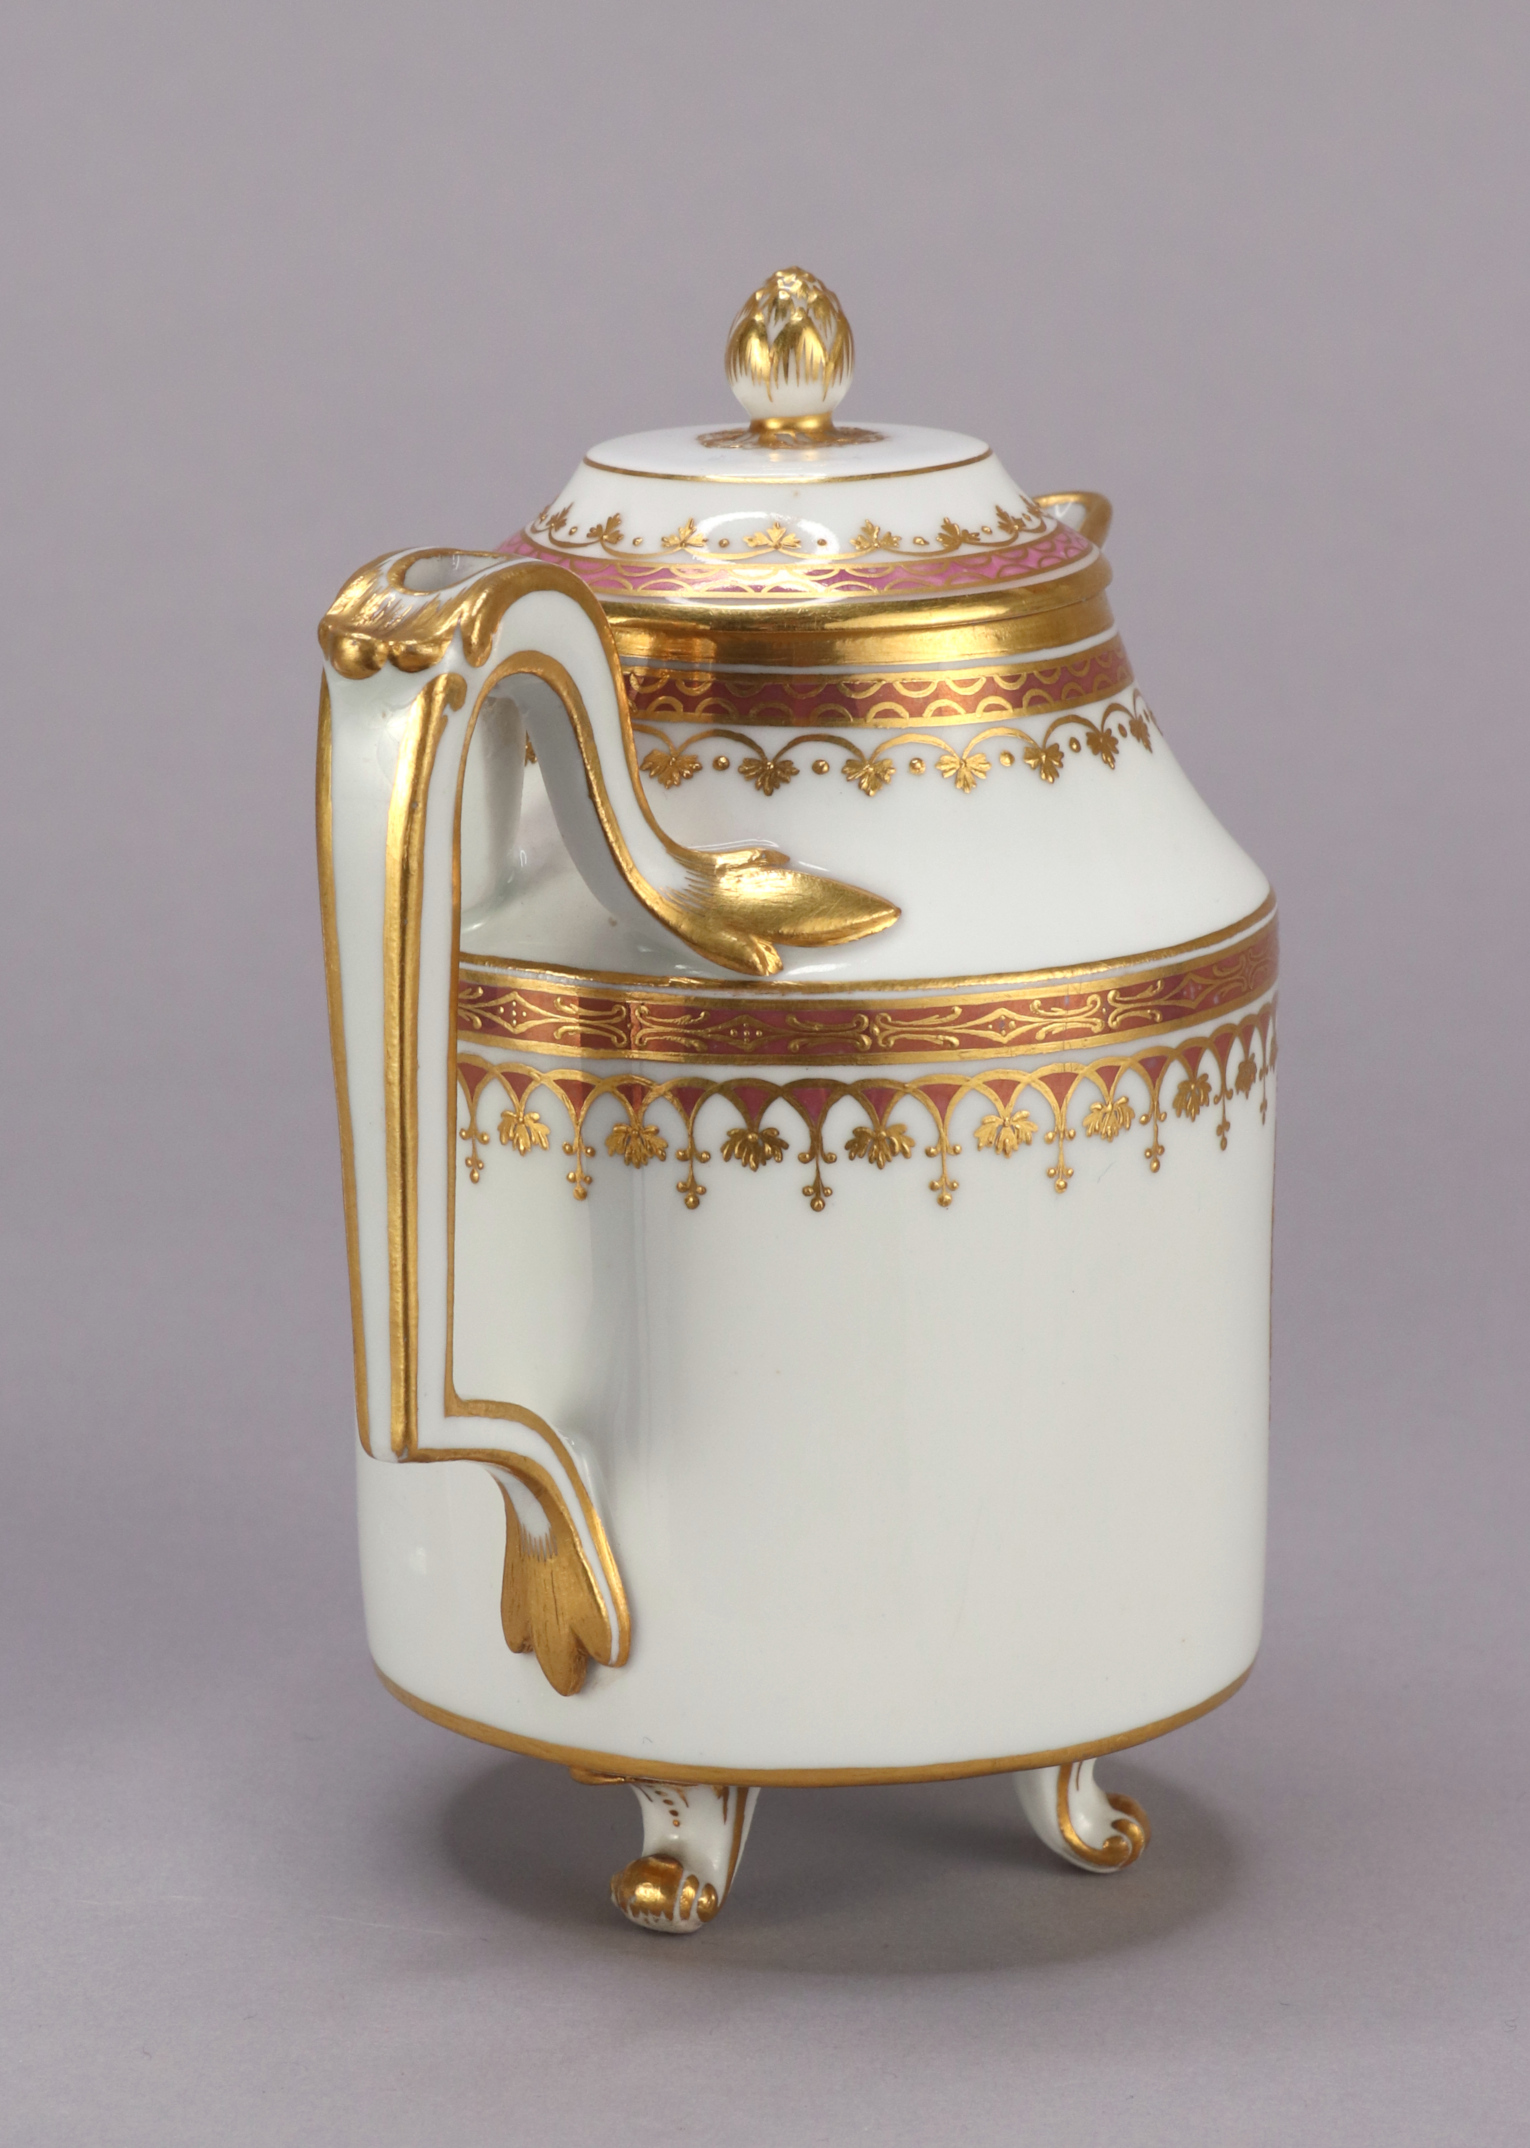 Vienna Porcelain Covered Milk Jug, c. 1794